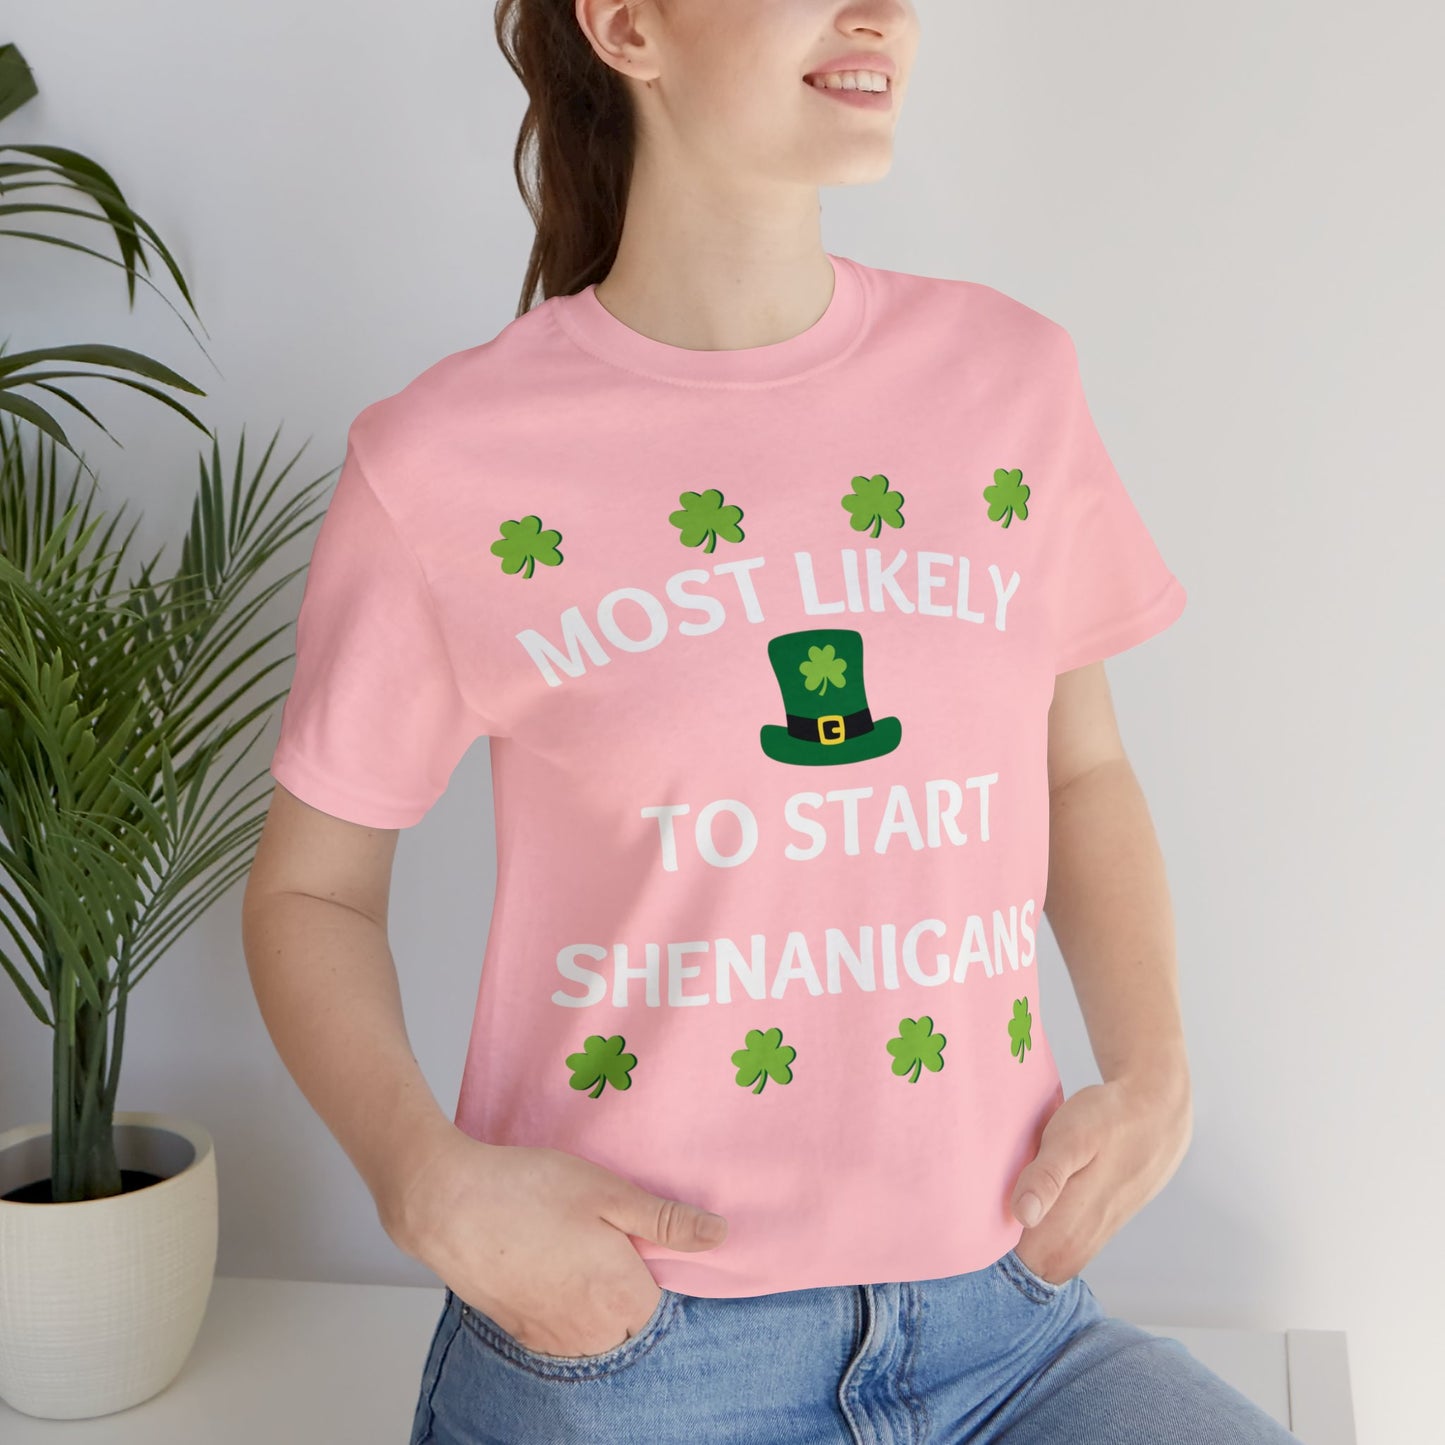 Most likely to start Shenanigans Family Matching St Patricks Shirt